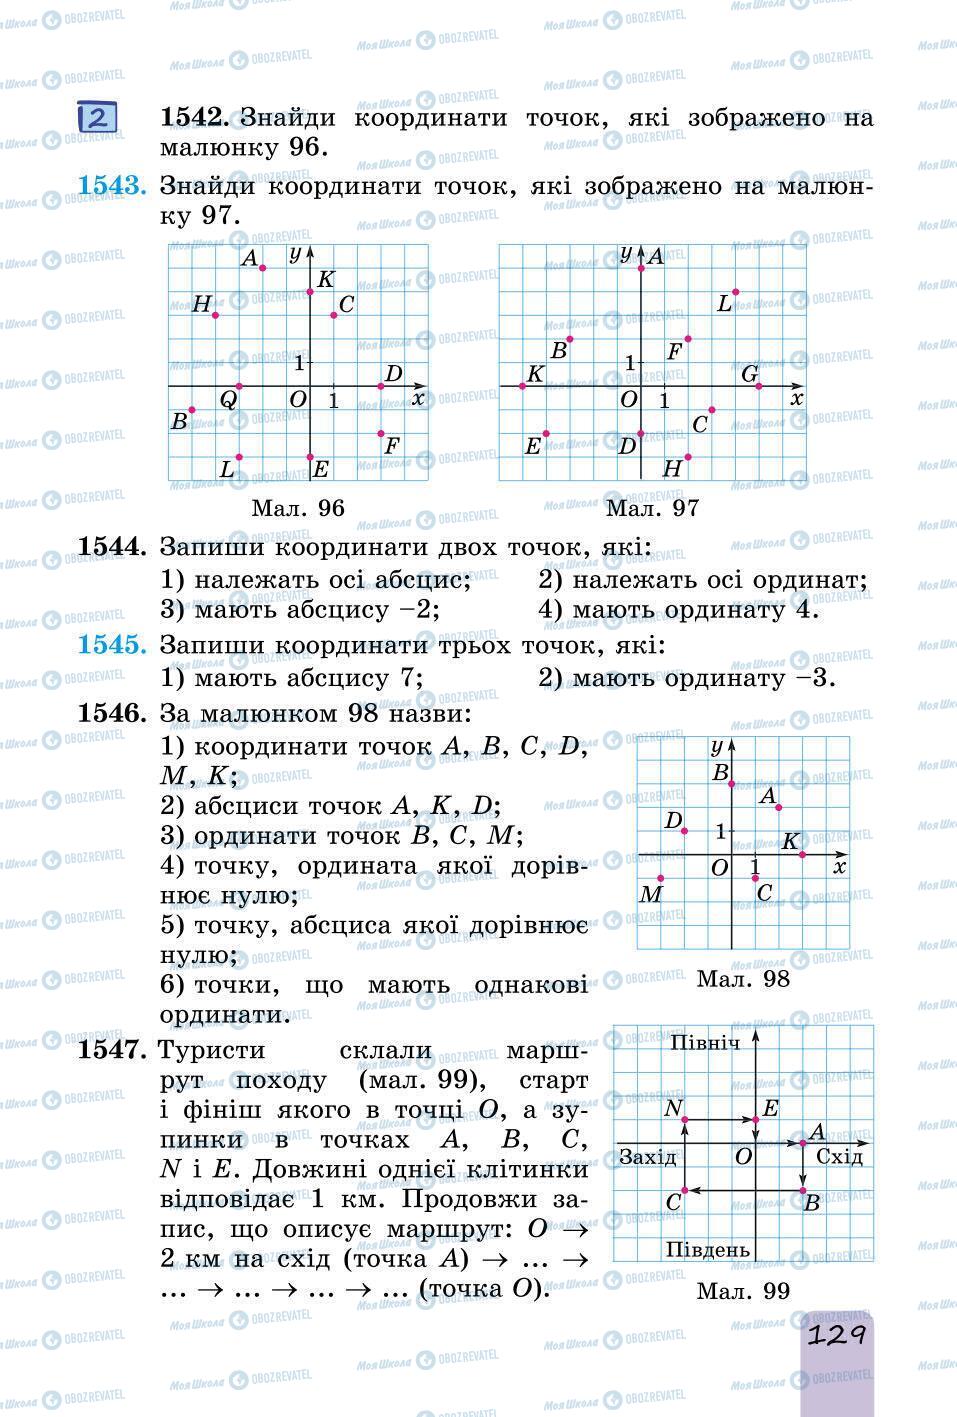 Учебники Математика 6 класс страница 129